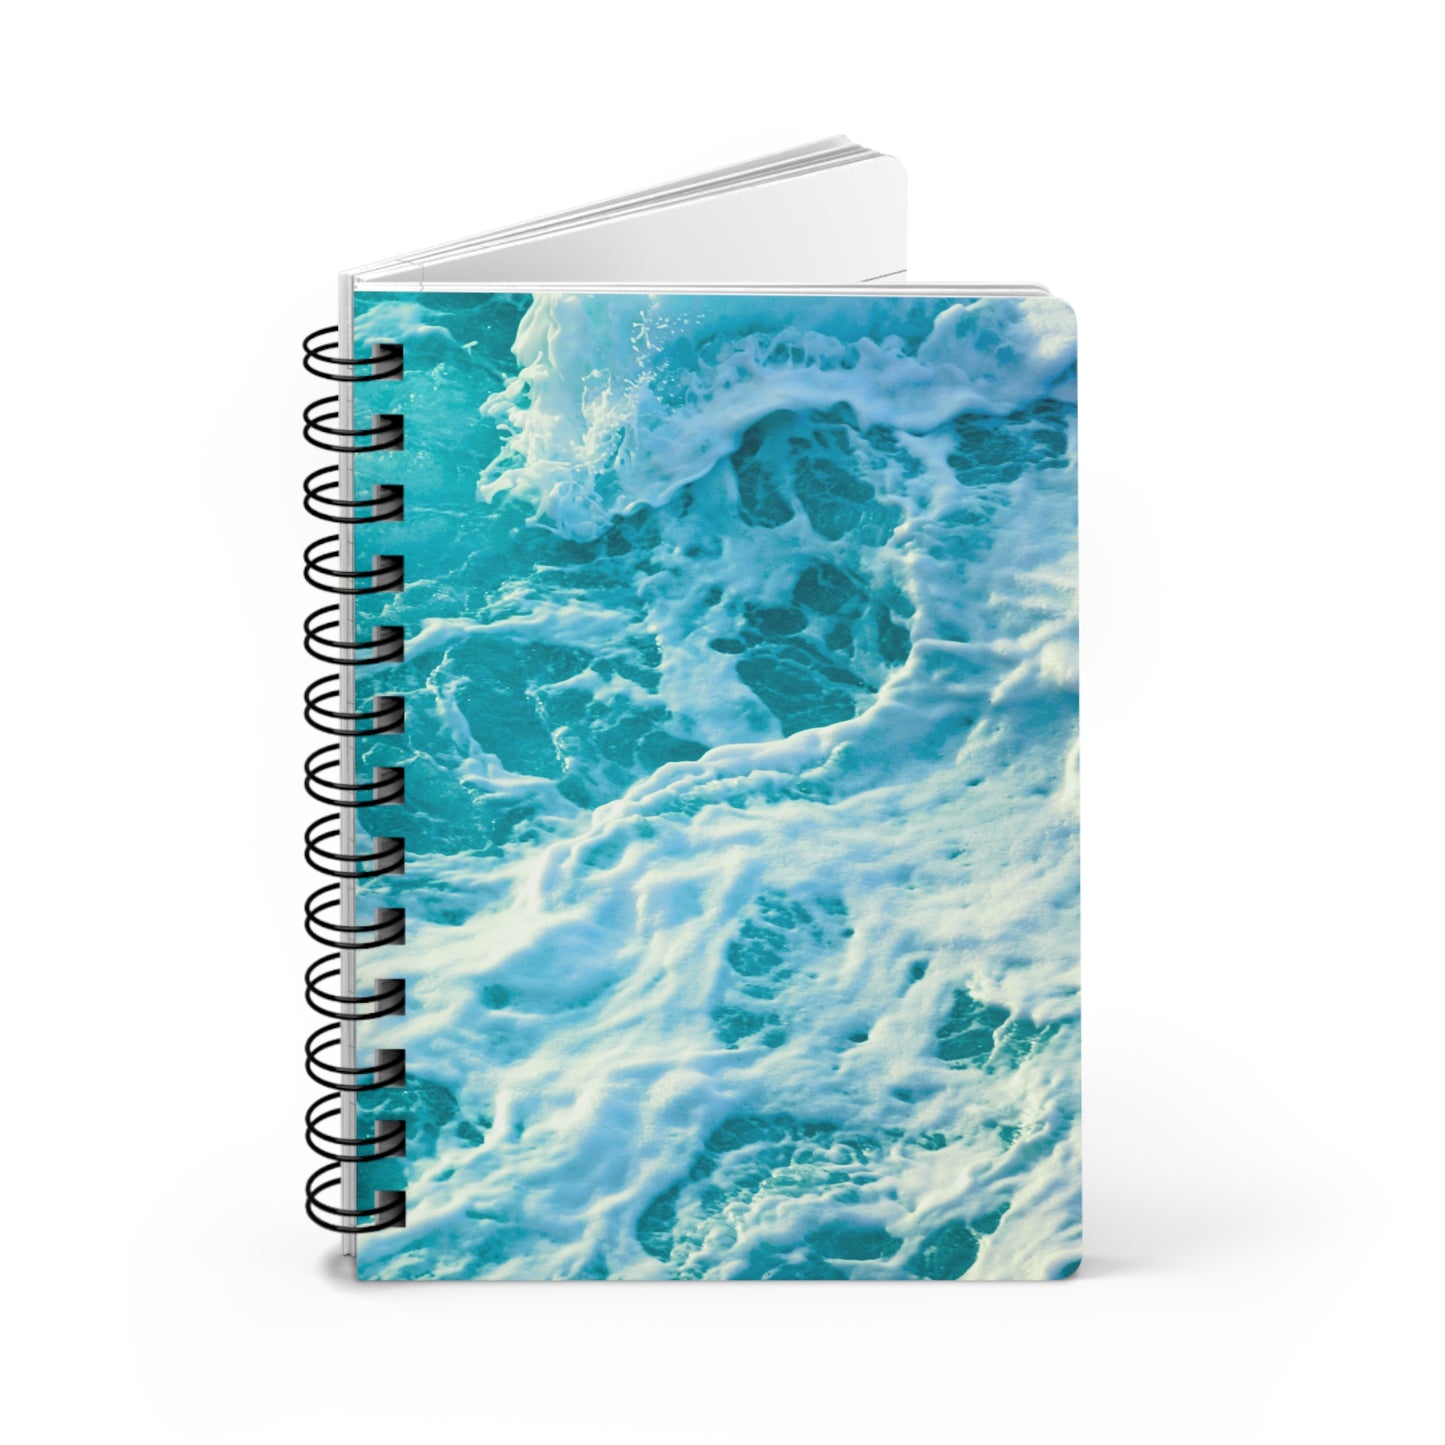 Ocean Blue Coastal Writing Sketch Inspiration Spiral Bound Journal